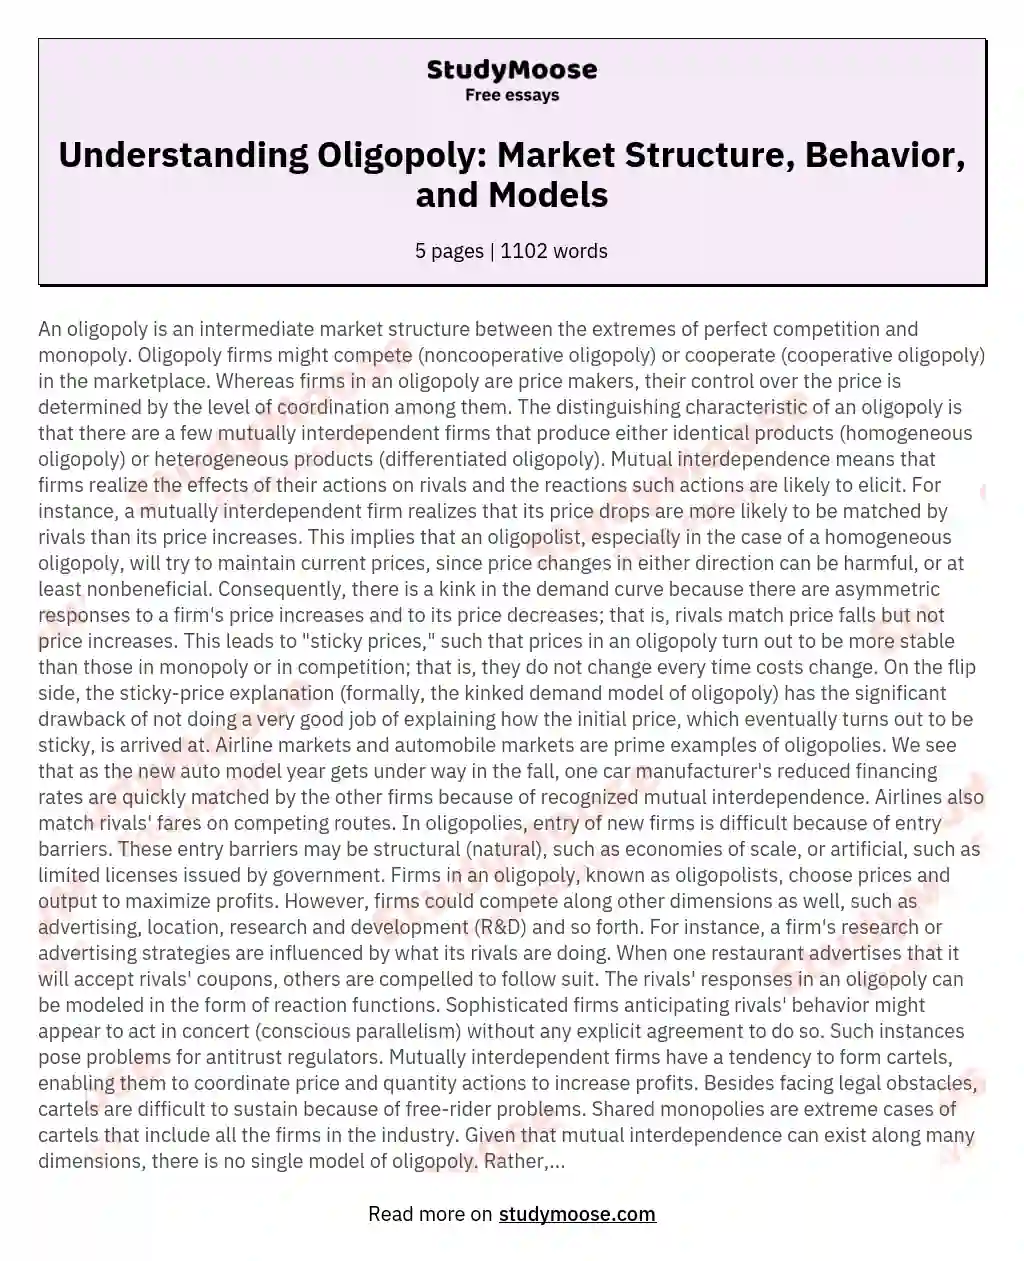 Understanding Oligopoly: Market Structure, Behavior, and Models essay